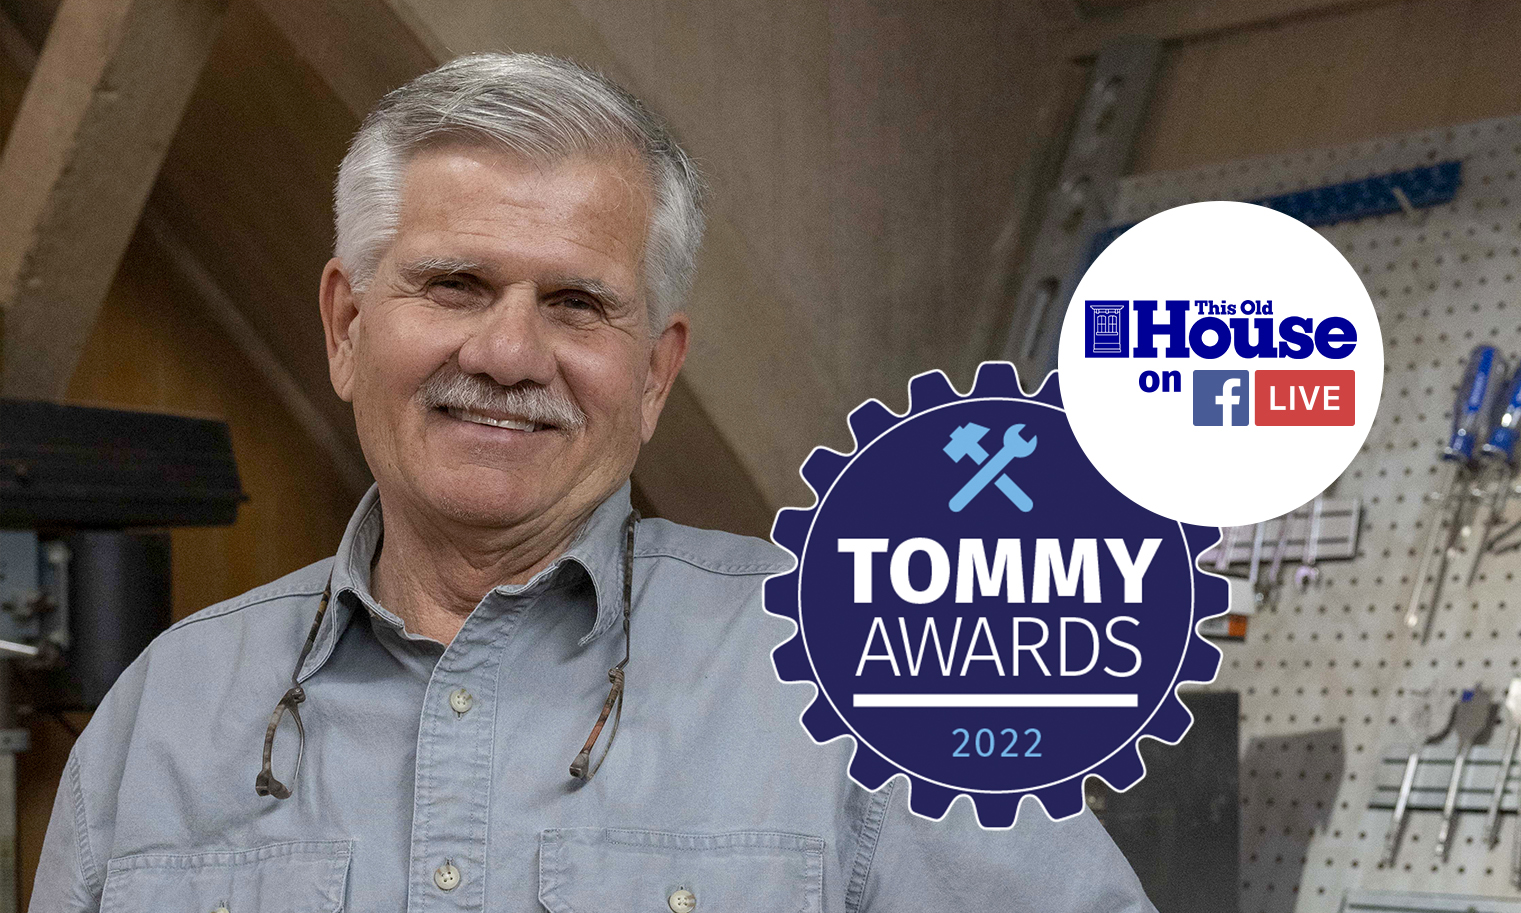 Tommy Awards Insider newsletter tout